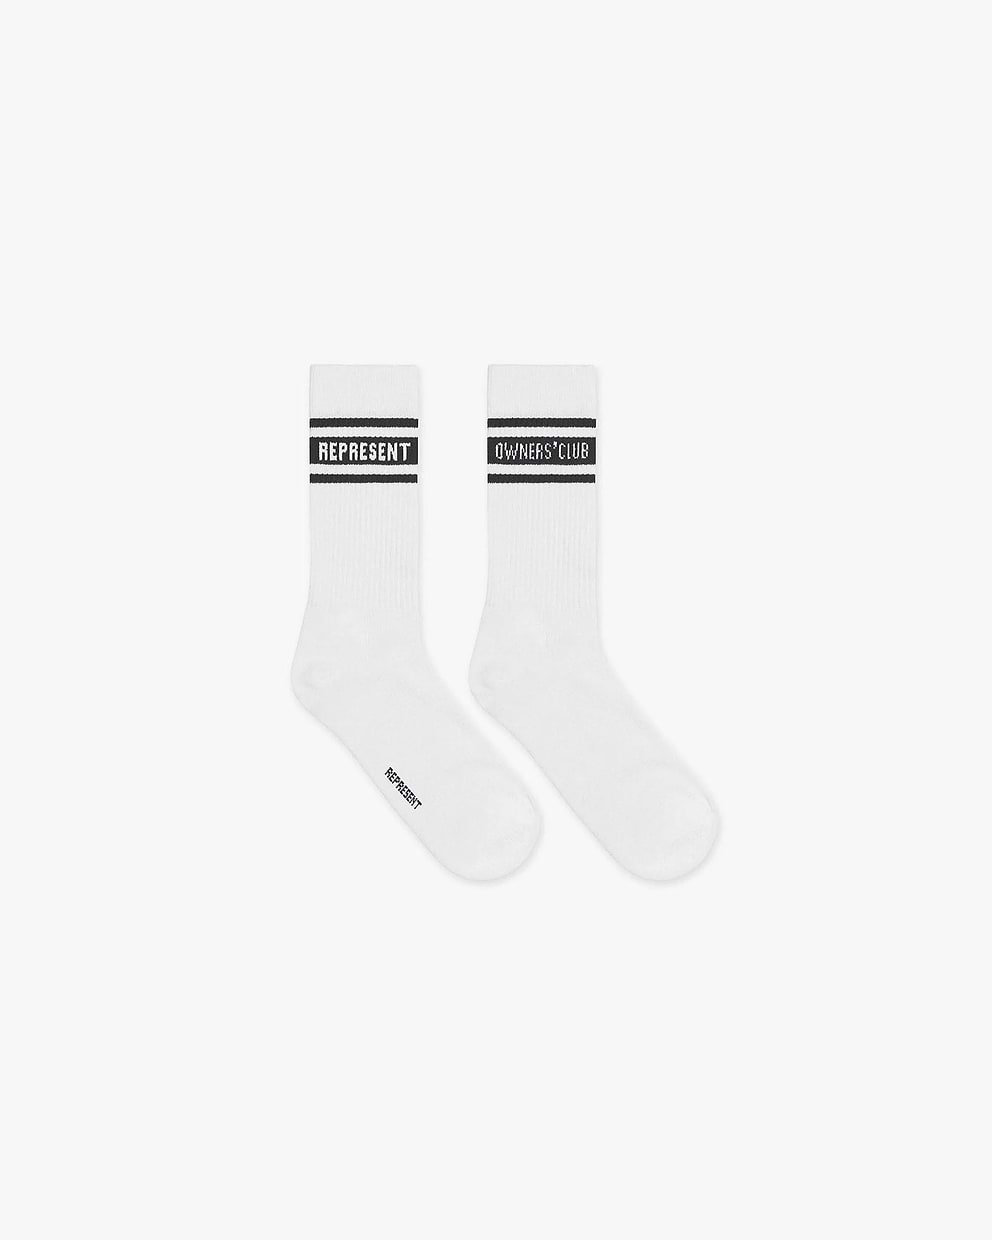 Represent Owners Club Socks - Flat White Black